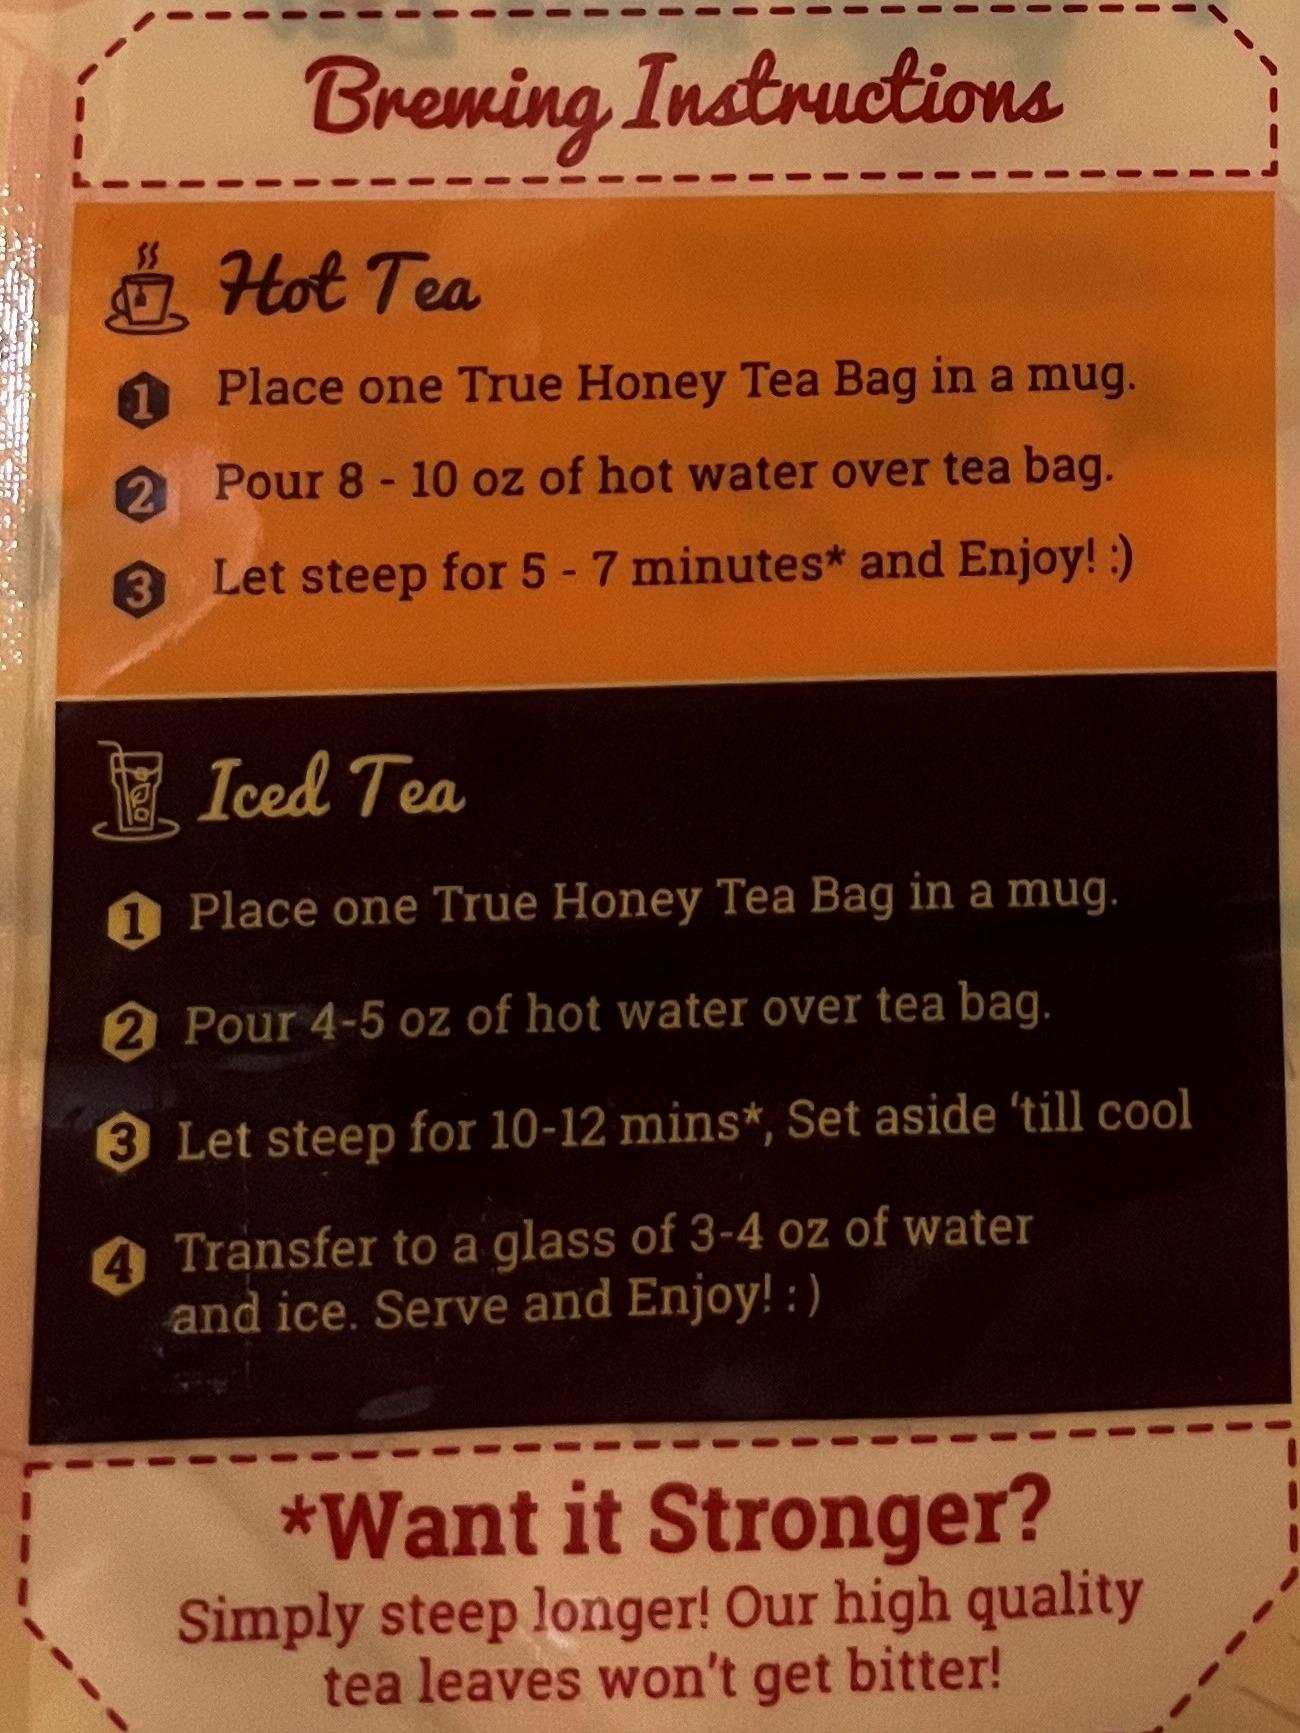 True Honey Teas Autumn Varity 12 Pack